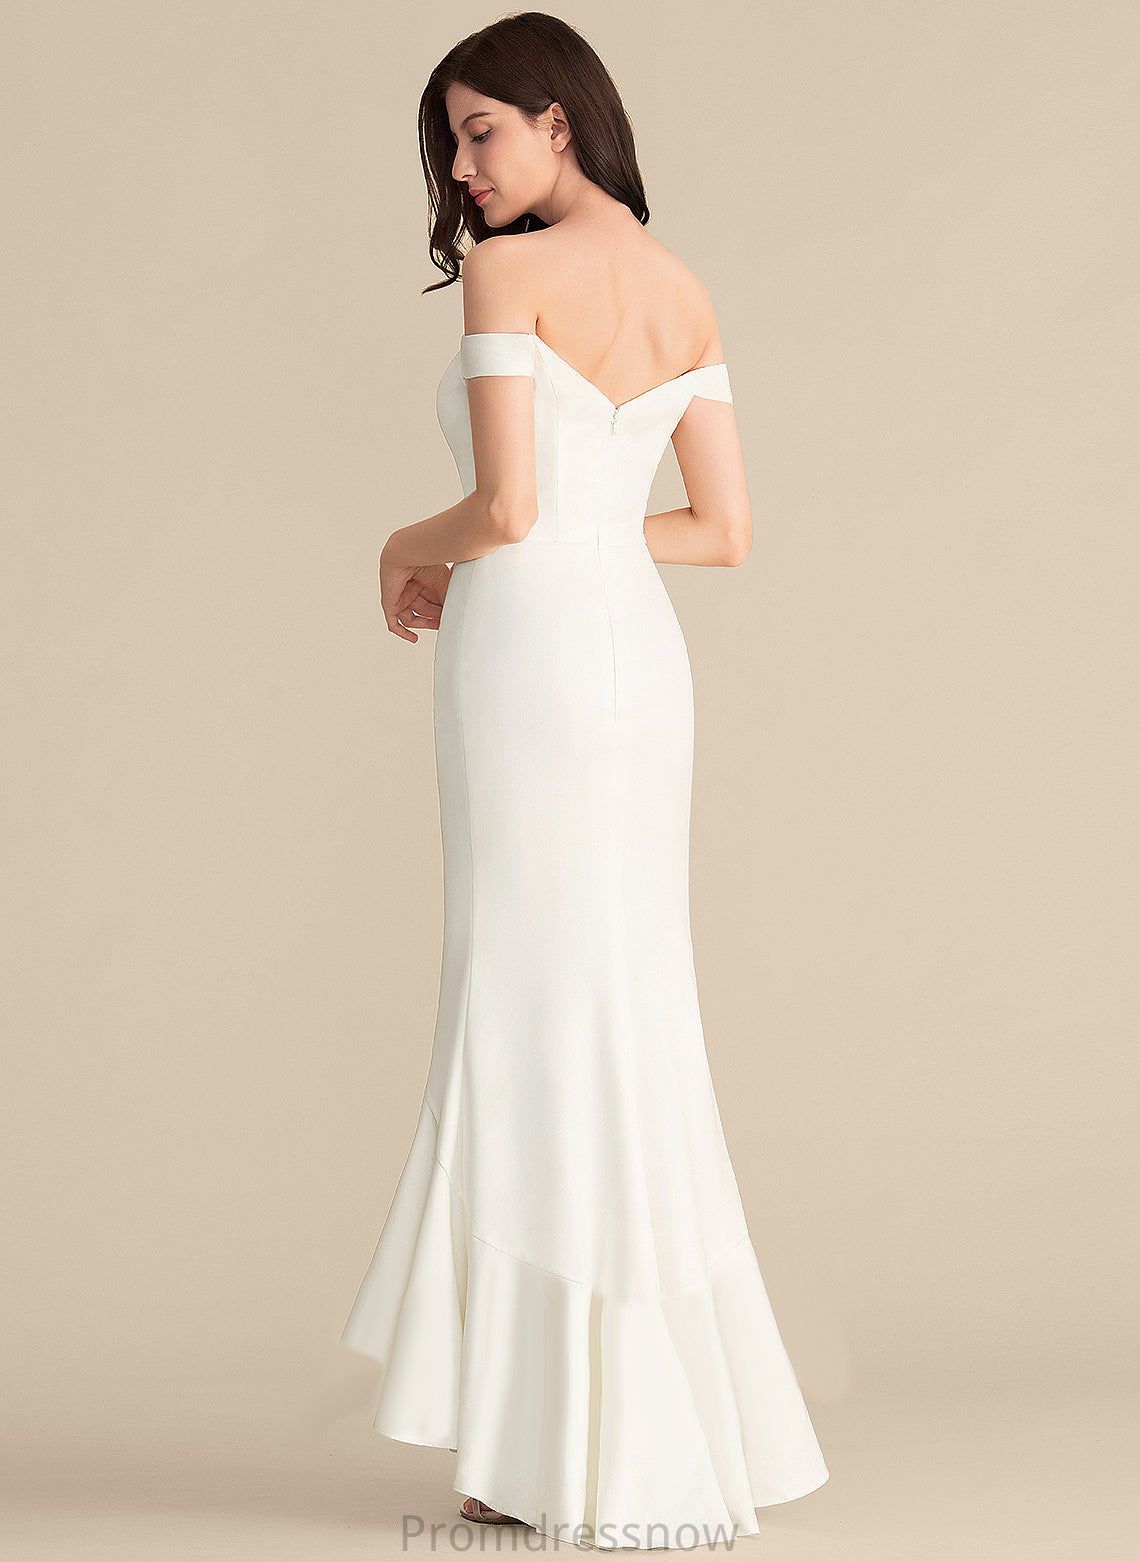 With Off-the-Shoulder Nylah Asymmetrical Ruffles Trumpet/Mermaid Wedding Dresses Wedding Dress Cascading